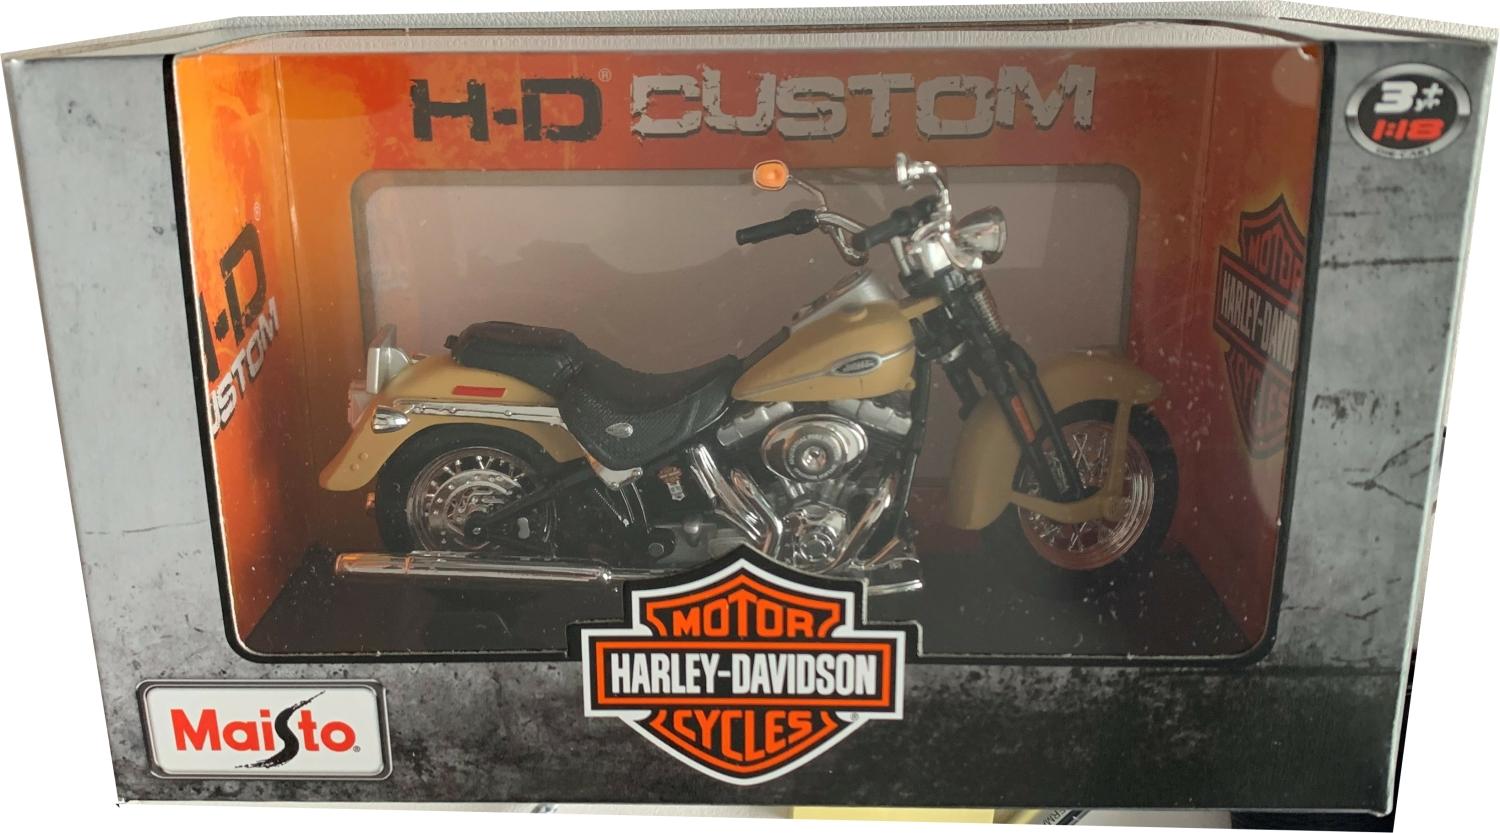 Harley Davidson 2005 FLSTCI softail springer classic in beige 1:18 scale model